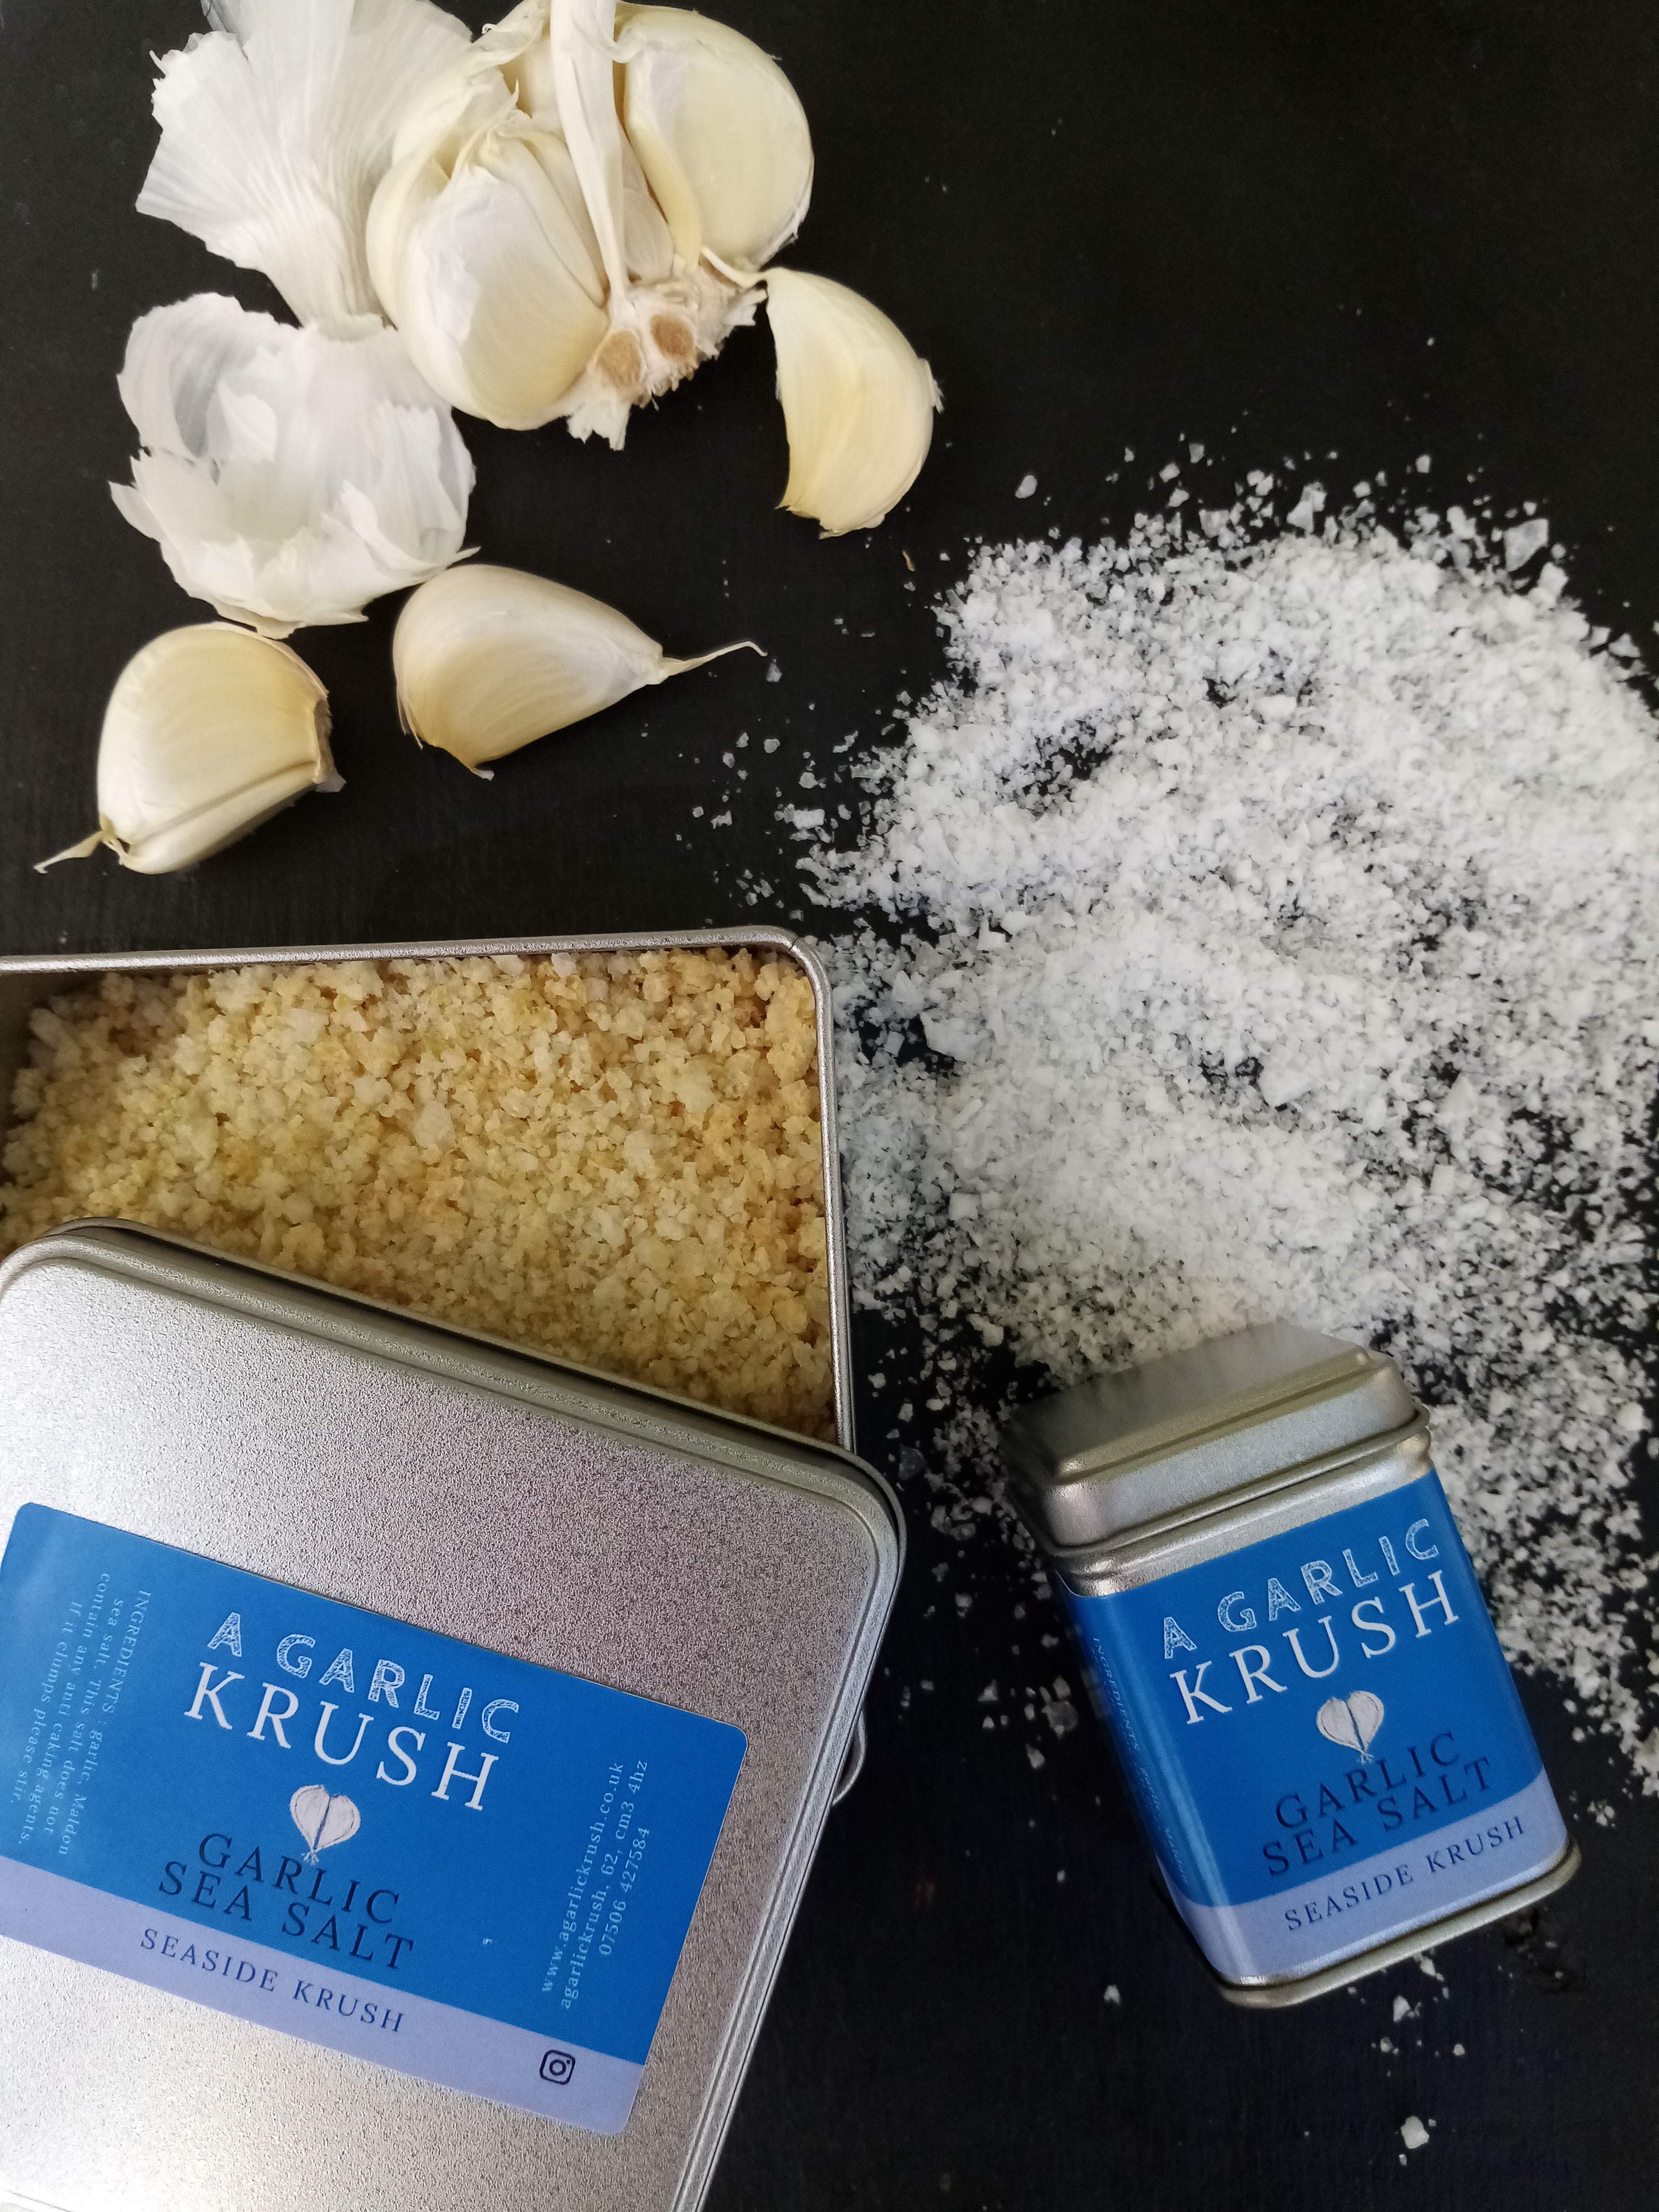 Black Garlic Sea salt and Garlic Sea Salt chefs pack